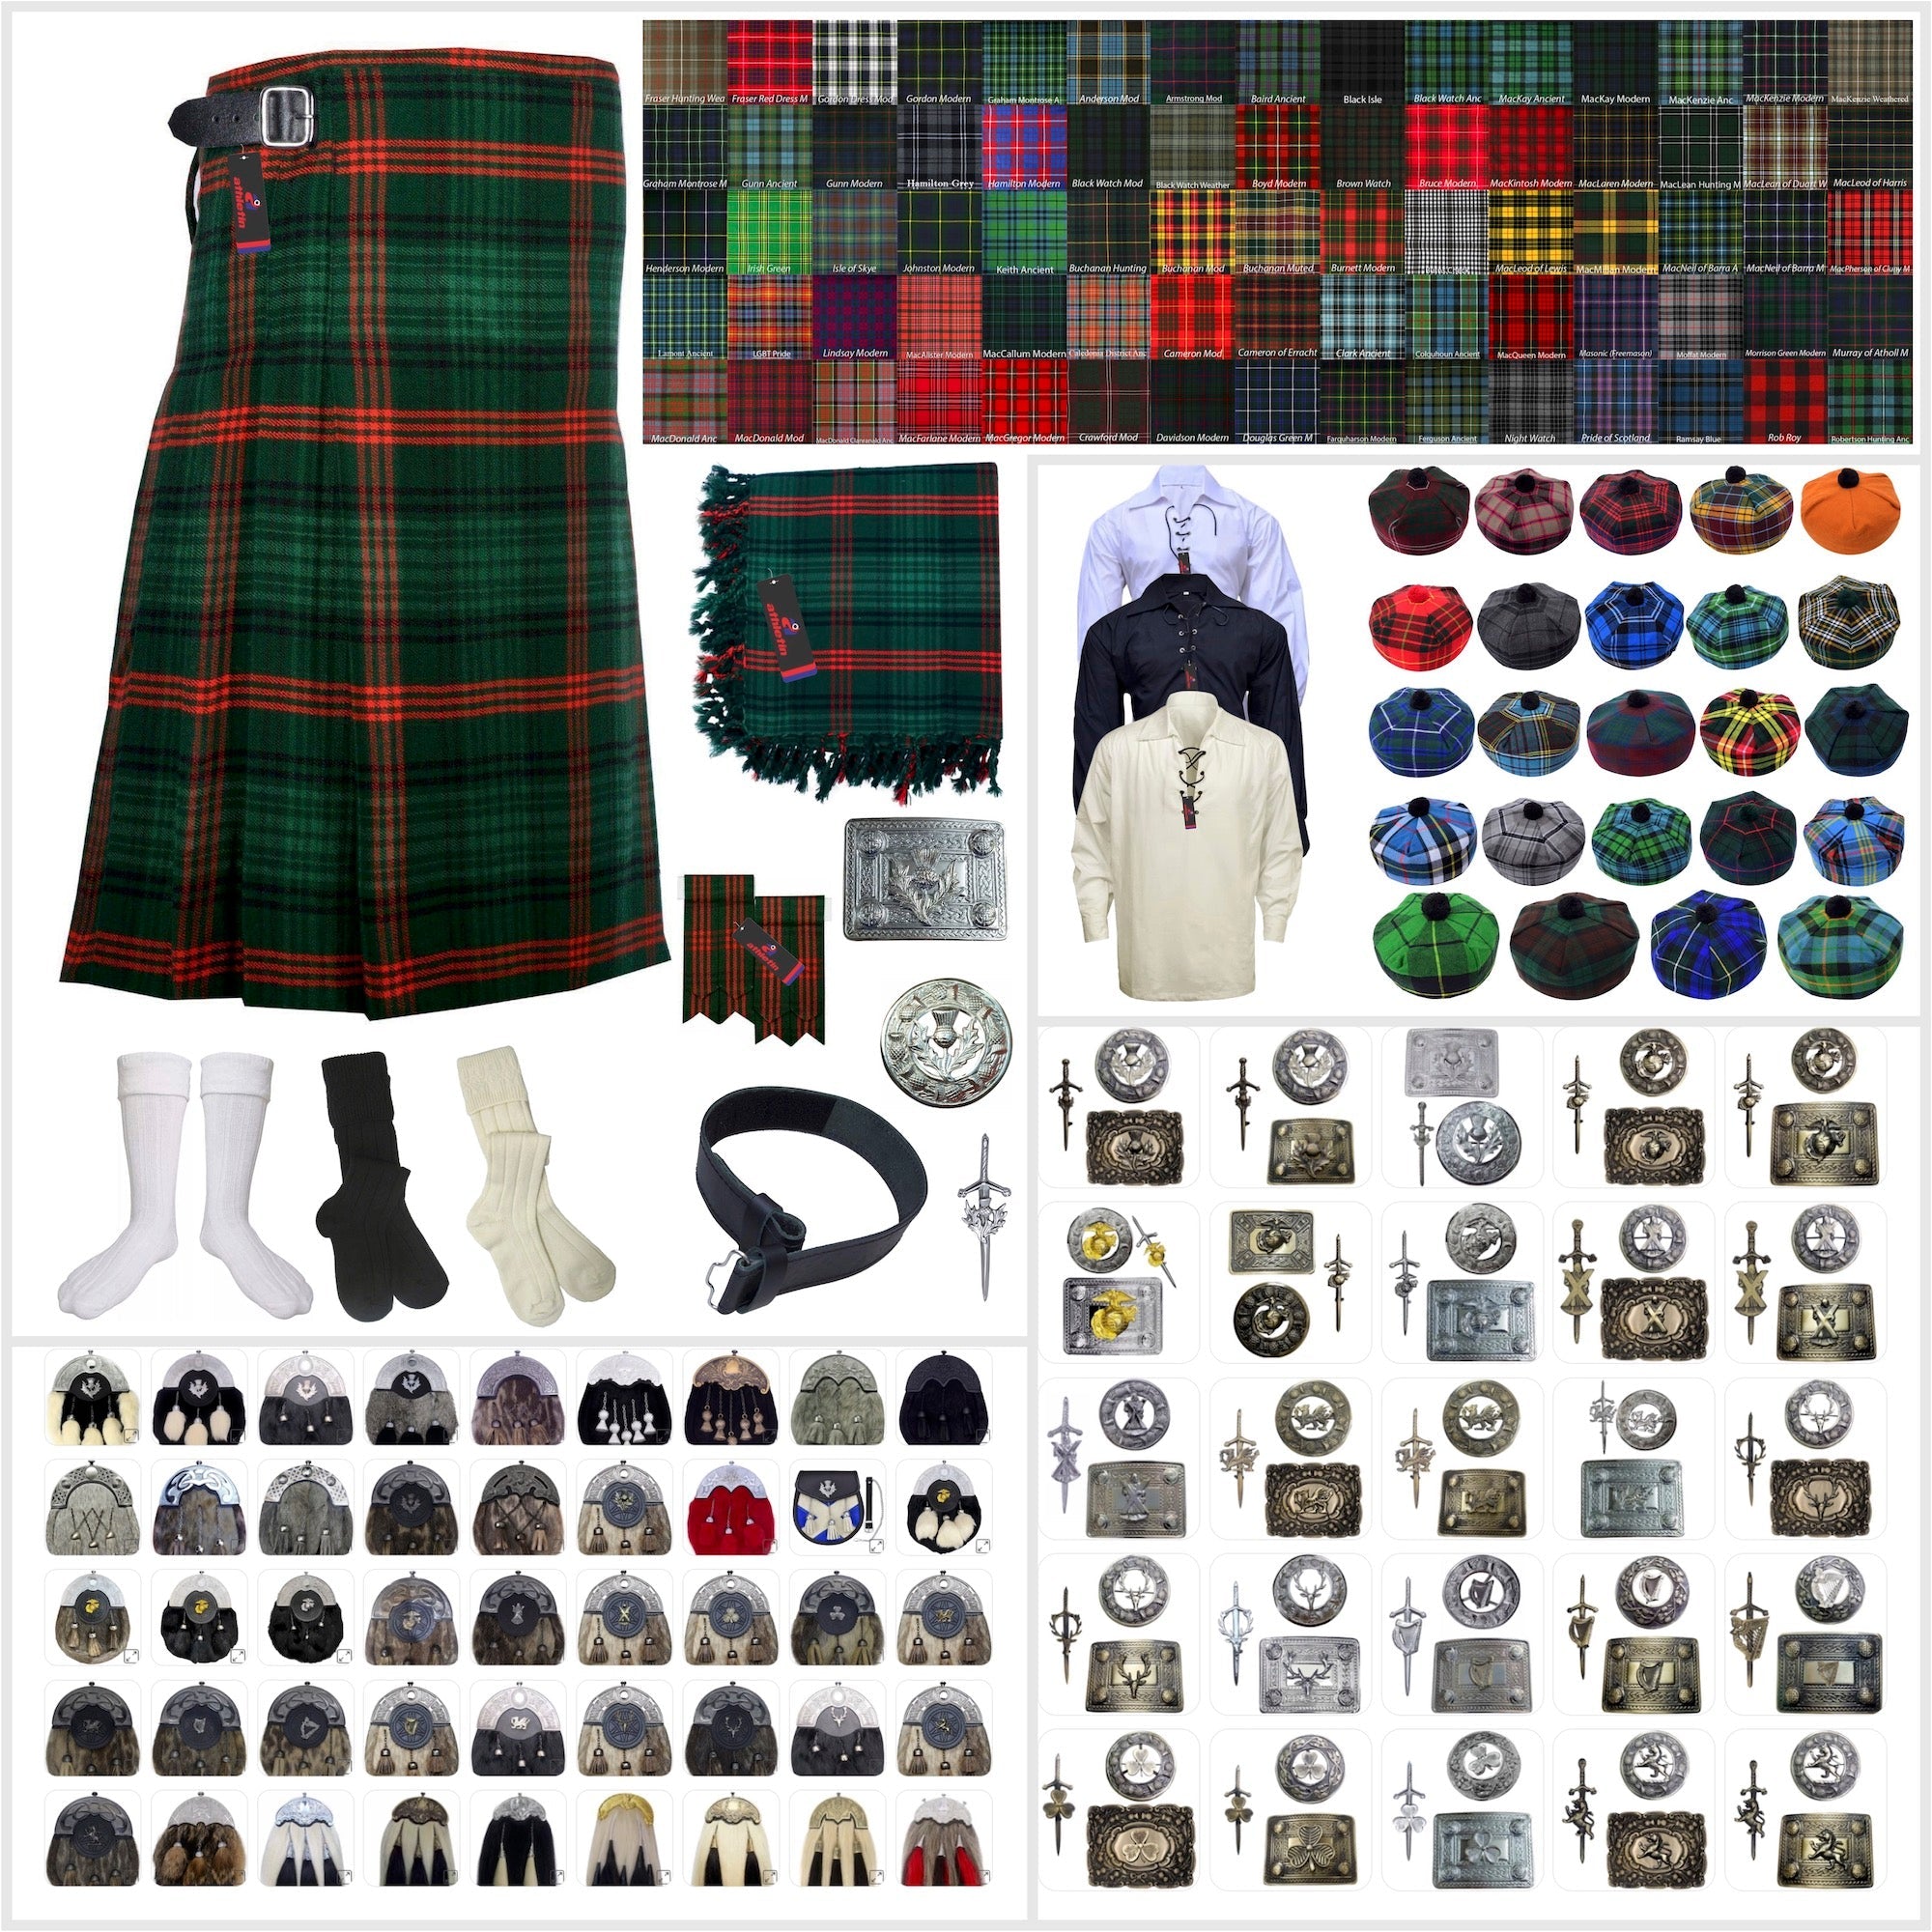 Ross Hunting Tartan Kilt Outfit - Highland Heritage Defined